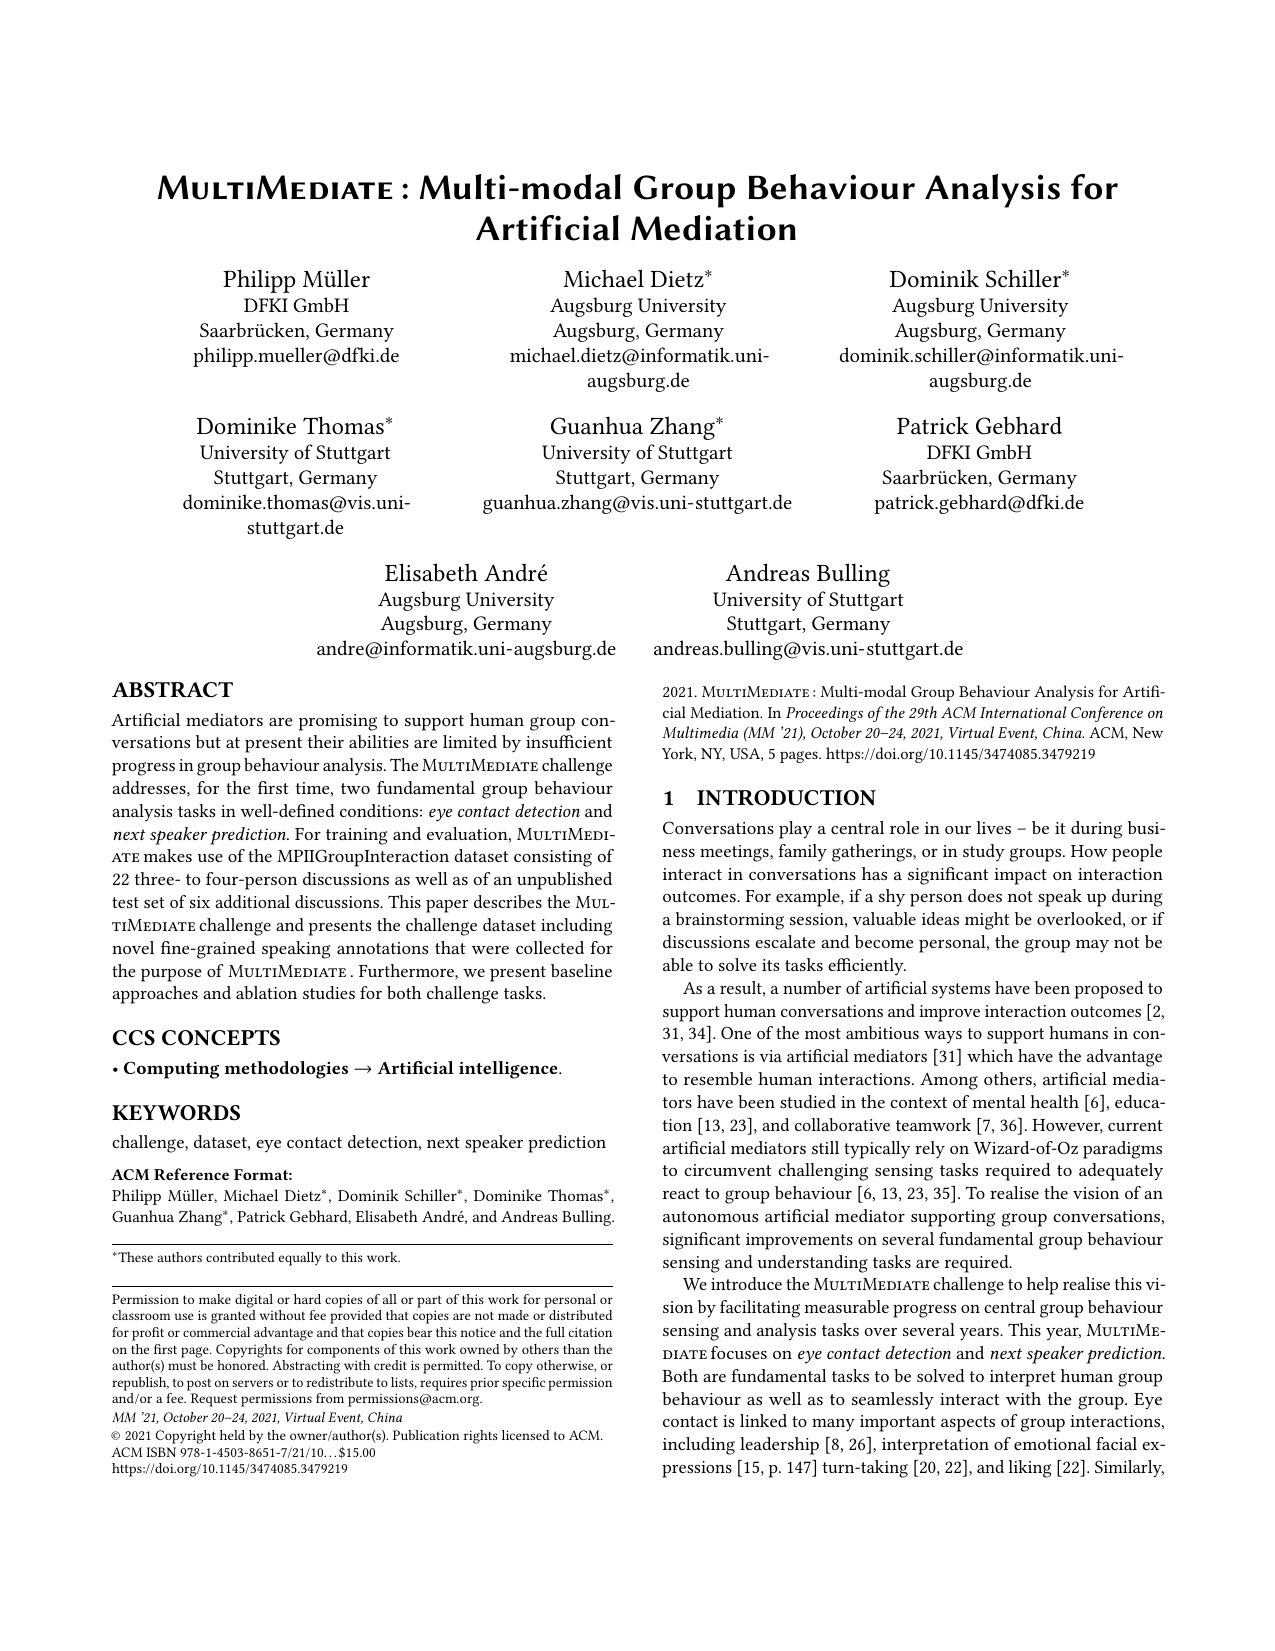 MultiMediate: Multi-modal Group Behaviour Analysis for Artificial Mediation